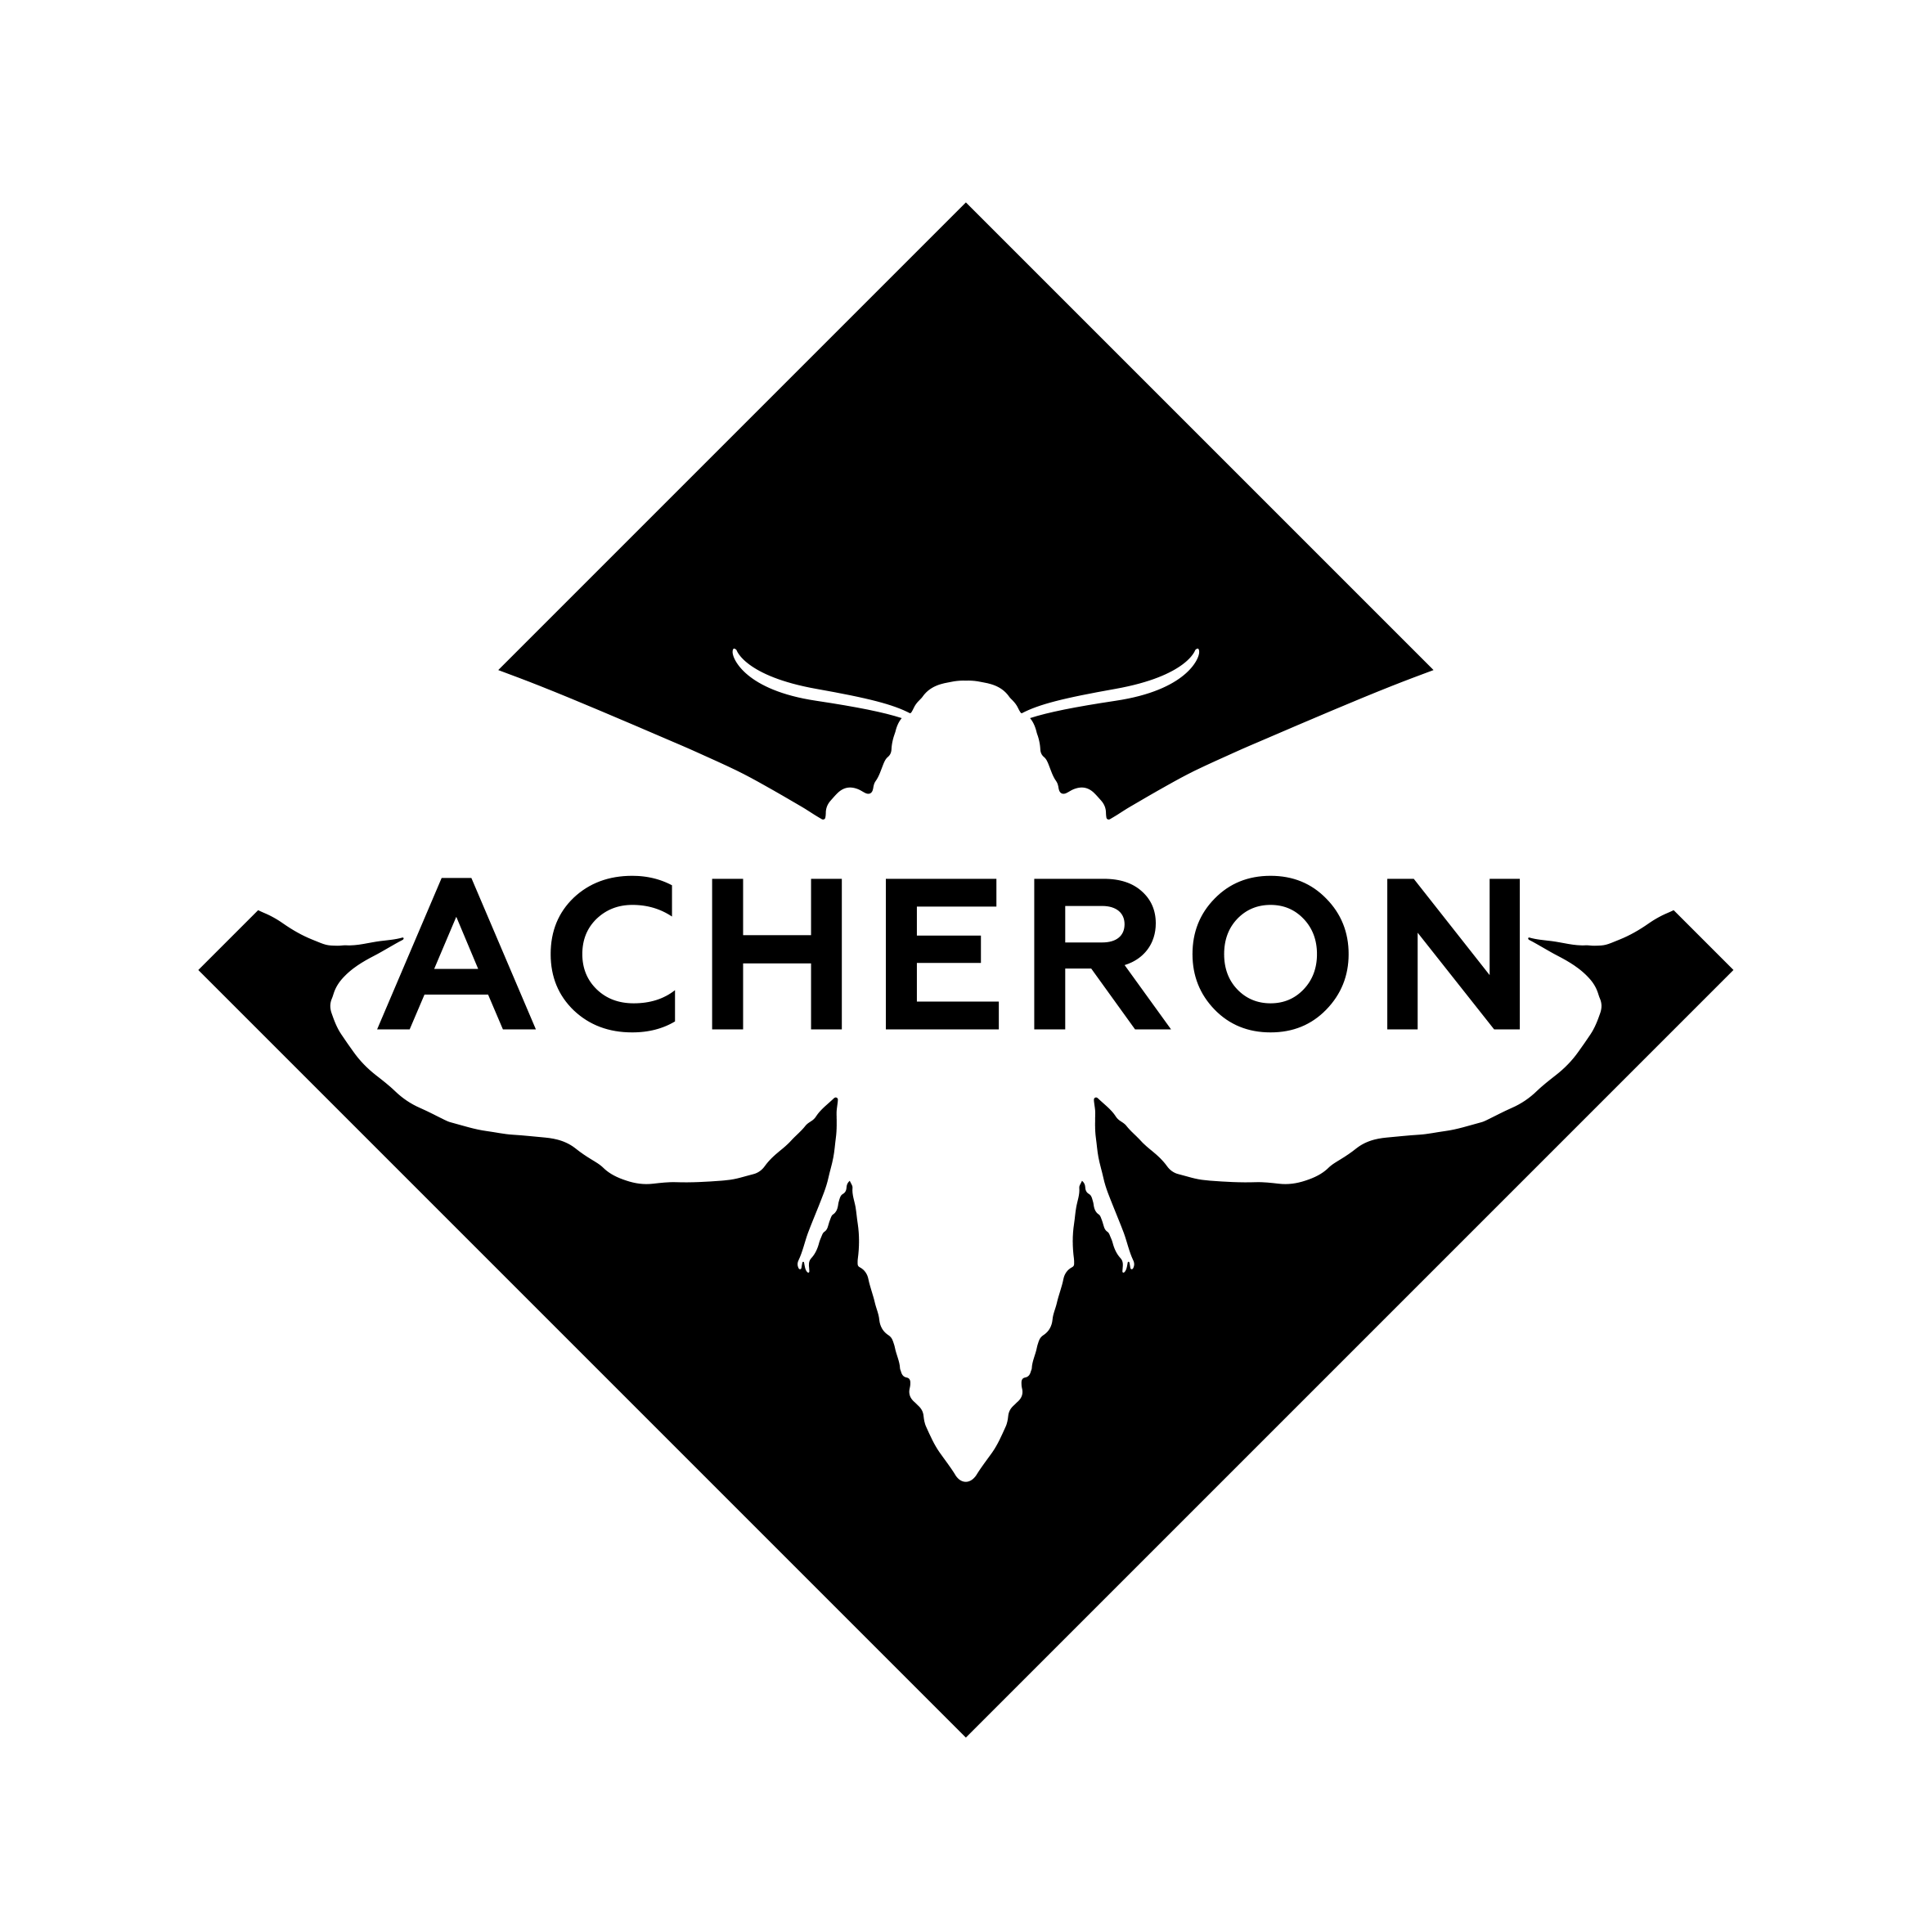 Acheron logo black 1